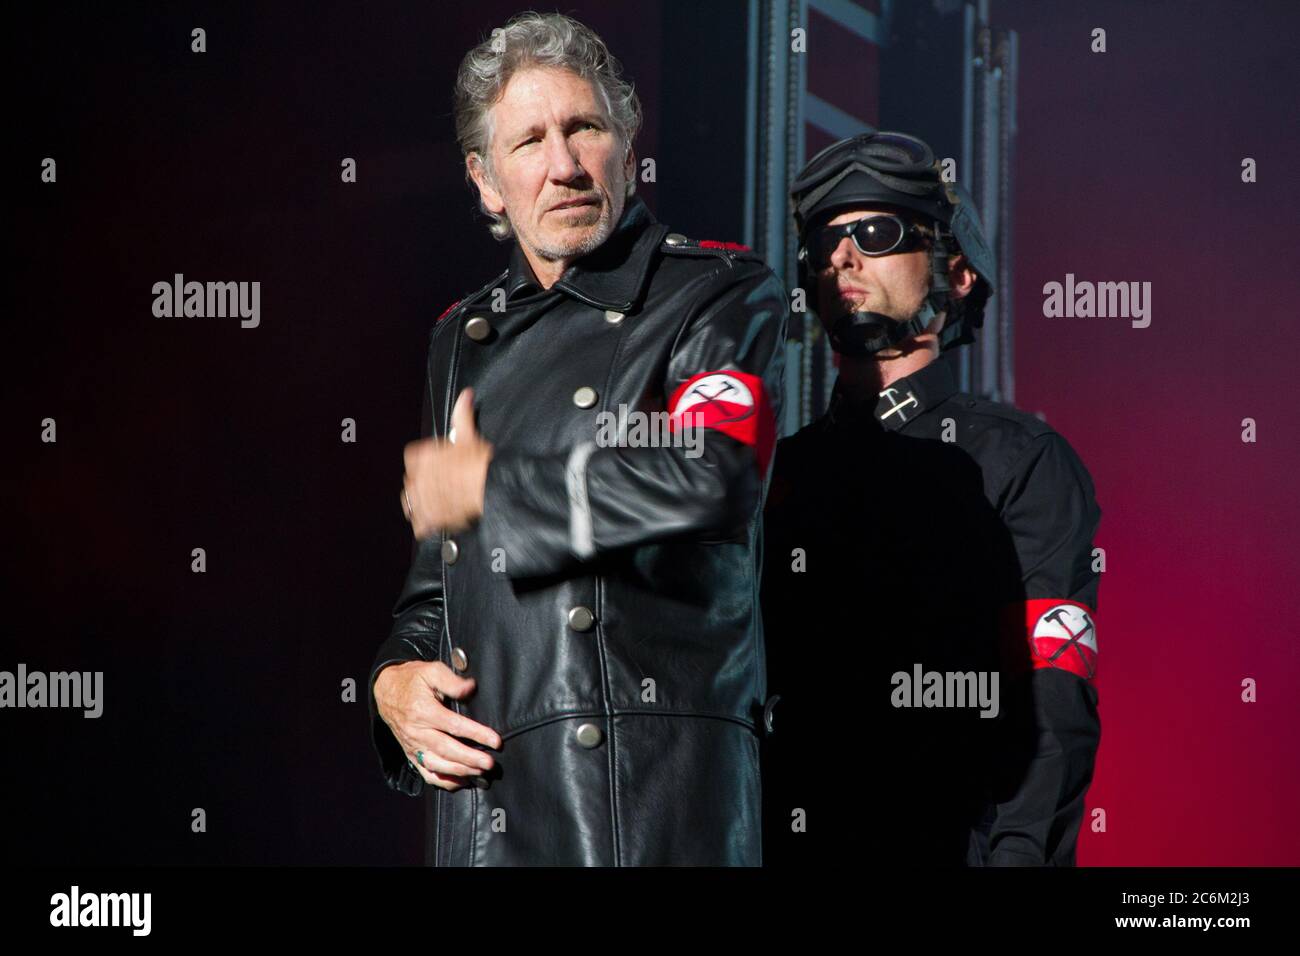 RIO DE JANEIRO, 29.03.2012: Roger Waters se produit au stade Joao Havelange à Rio de Janeiro (Néstor J. Beremnum / Alay News) Banque D'Images